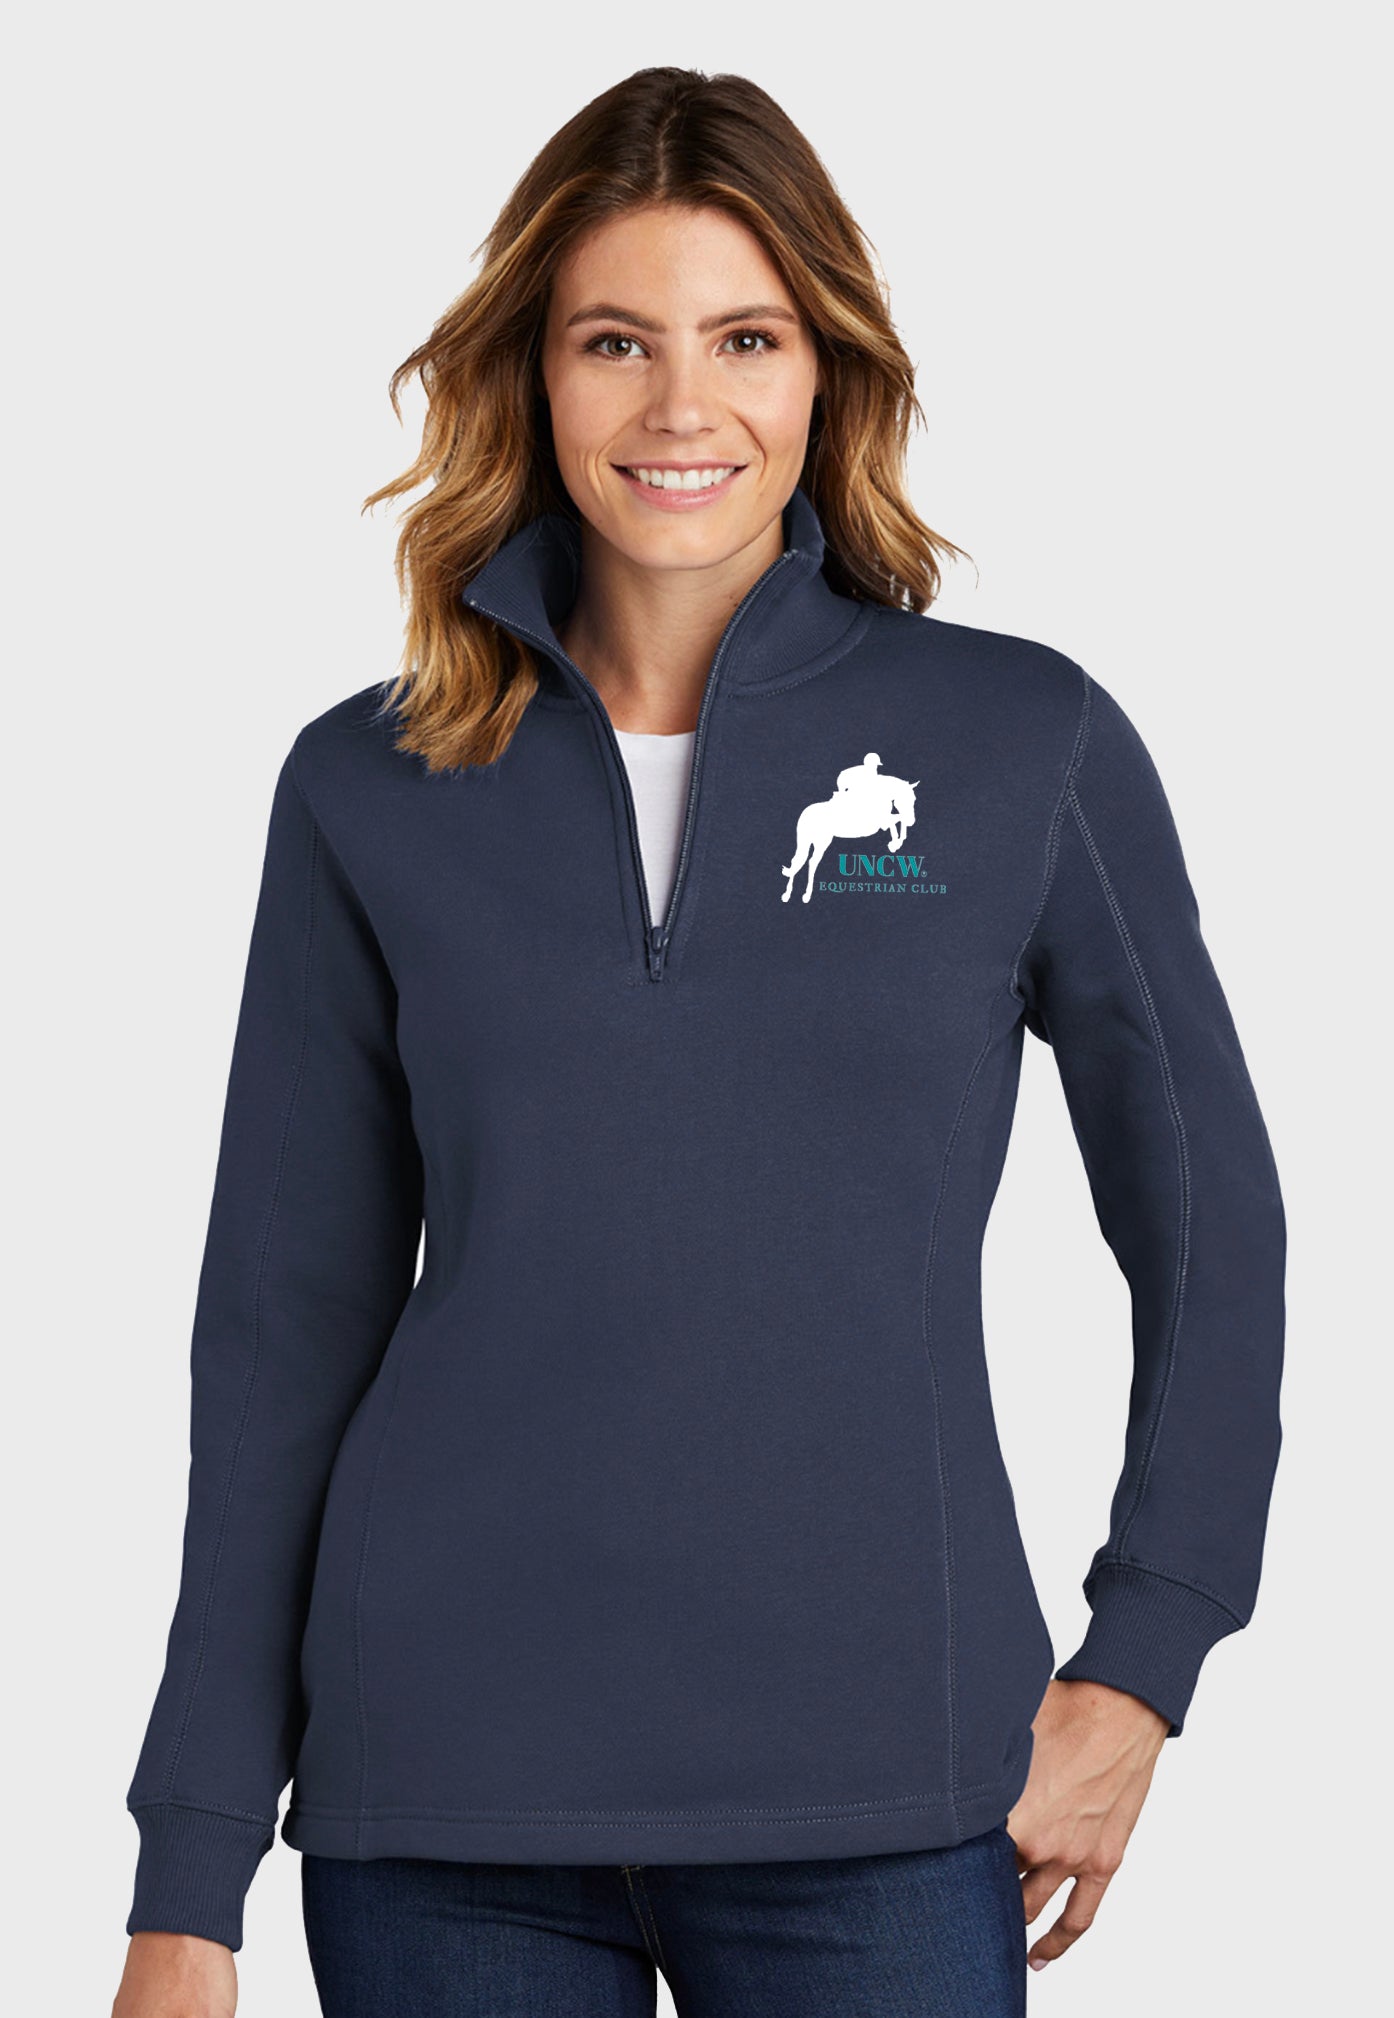 UNCW Equestrian Club Sport-Tek® Ladies 1/4-Zip Sweatshirt - Navy